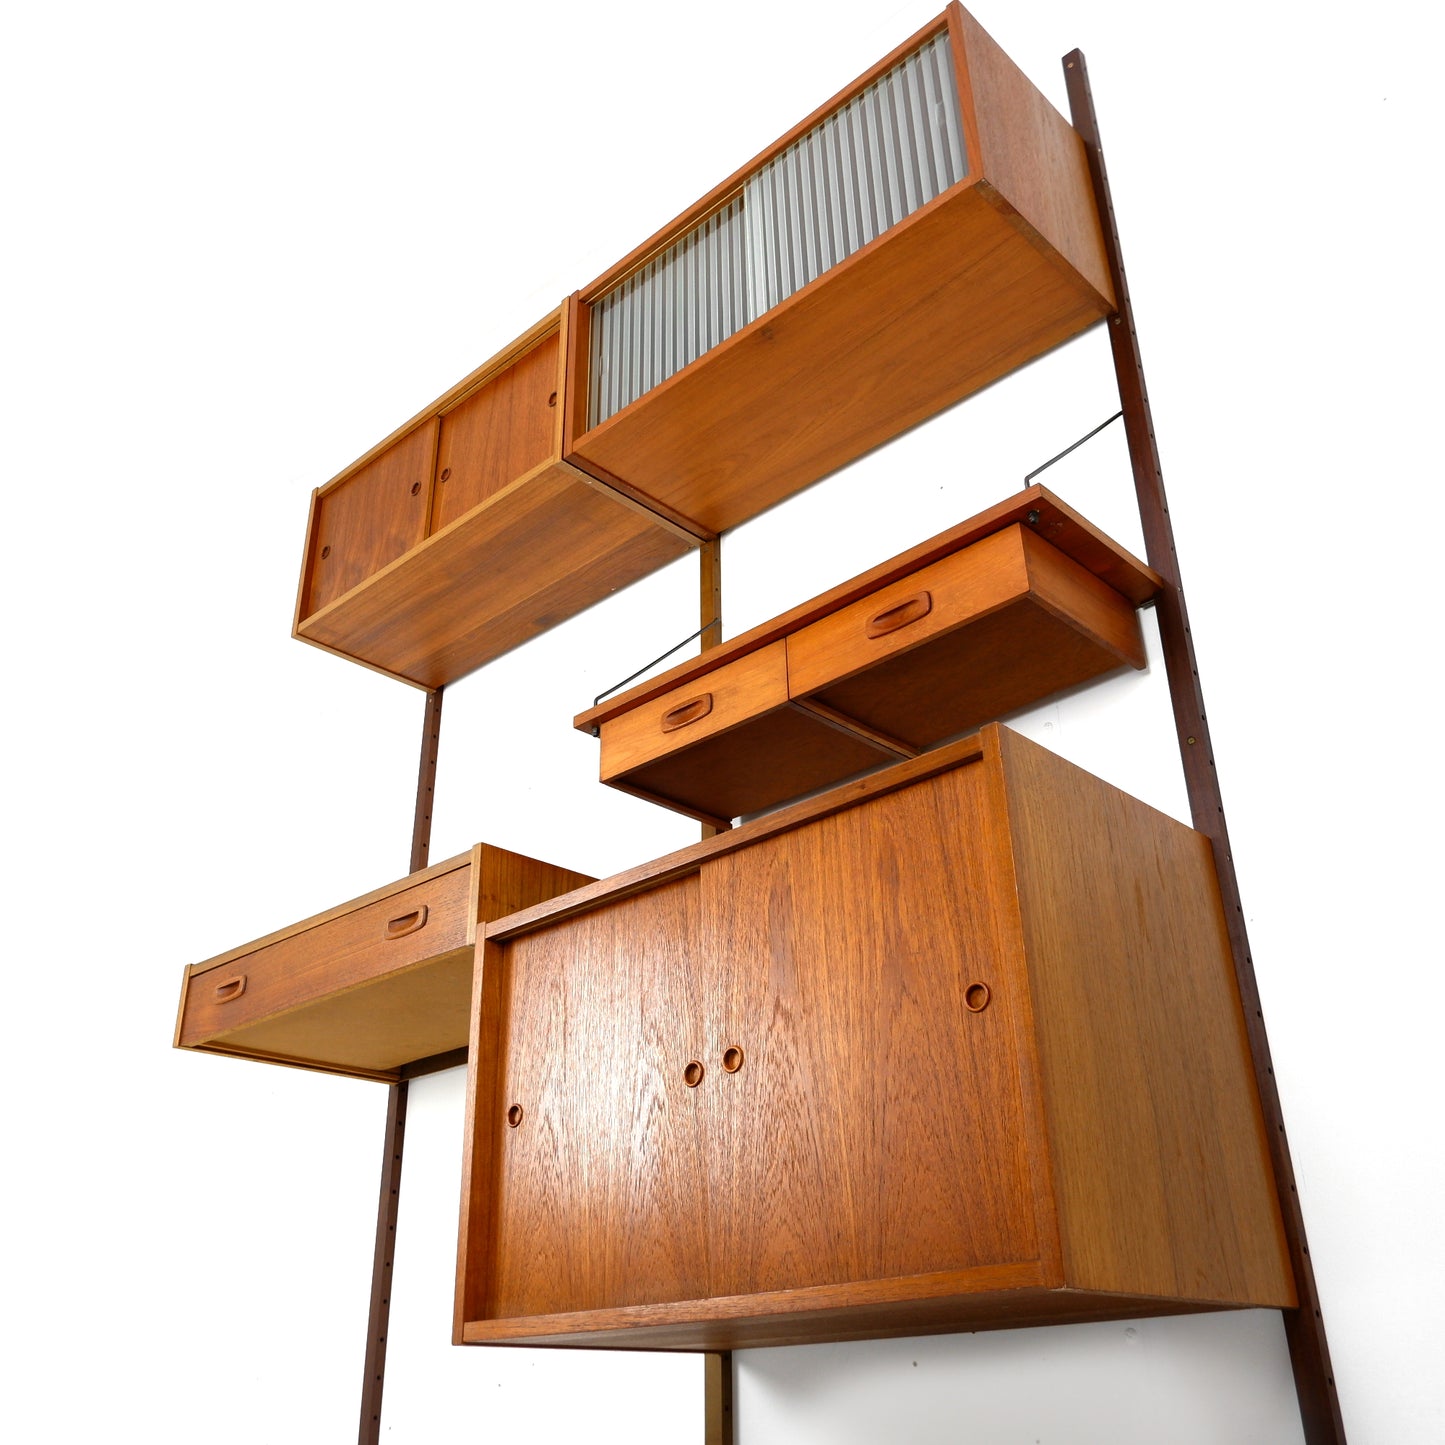 Danish PS System Teak Wall Units - 2 Bays - Desk, Bookshelves and Cabinets - Modular Ladder Shelving